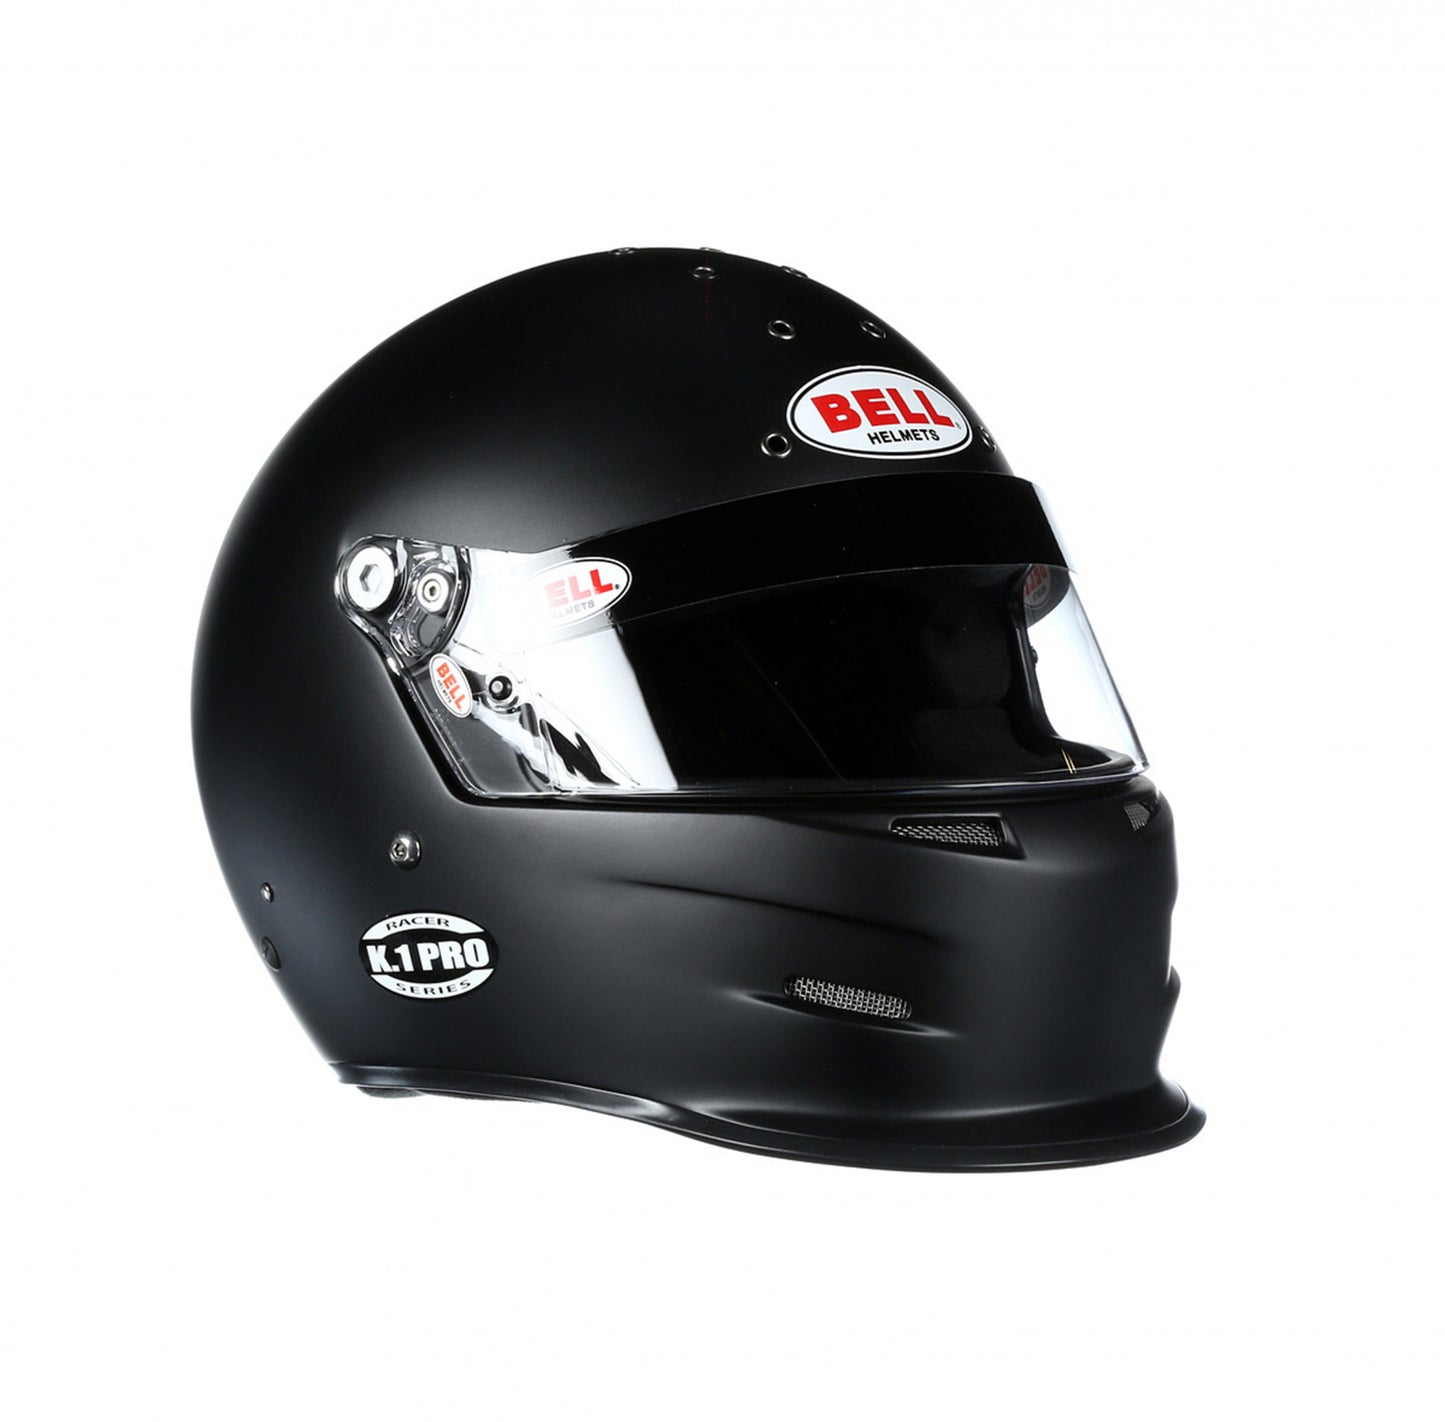 Bell K1 Pro Matte Black Helmet Size X Small